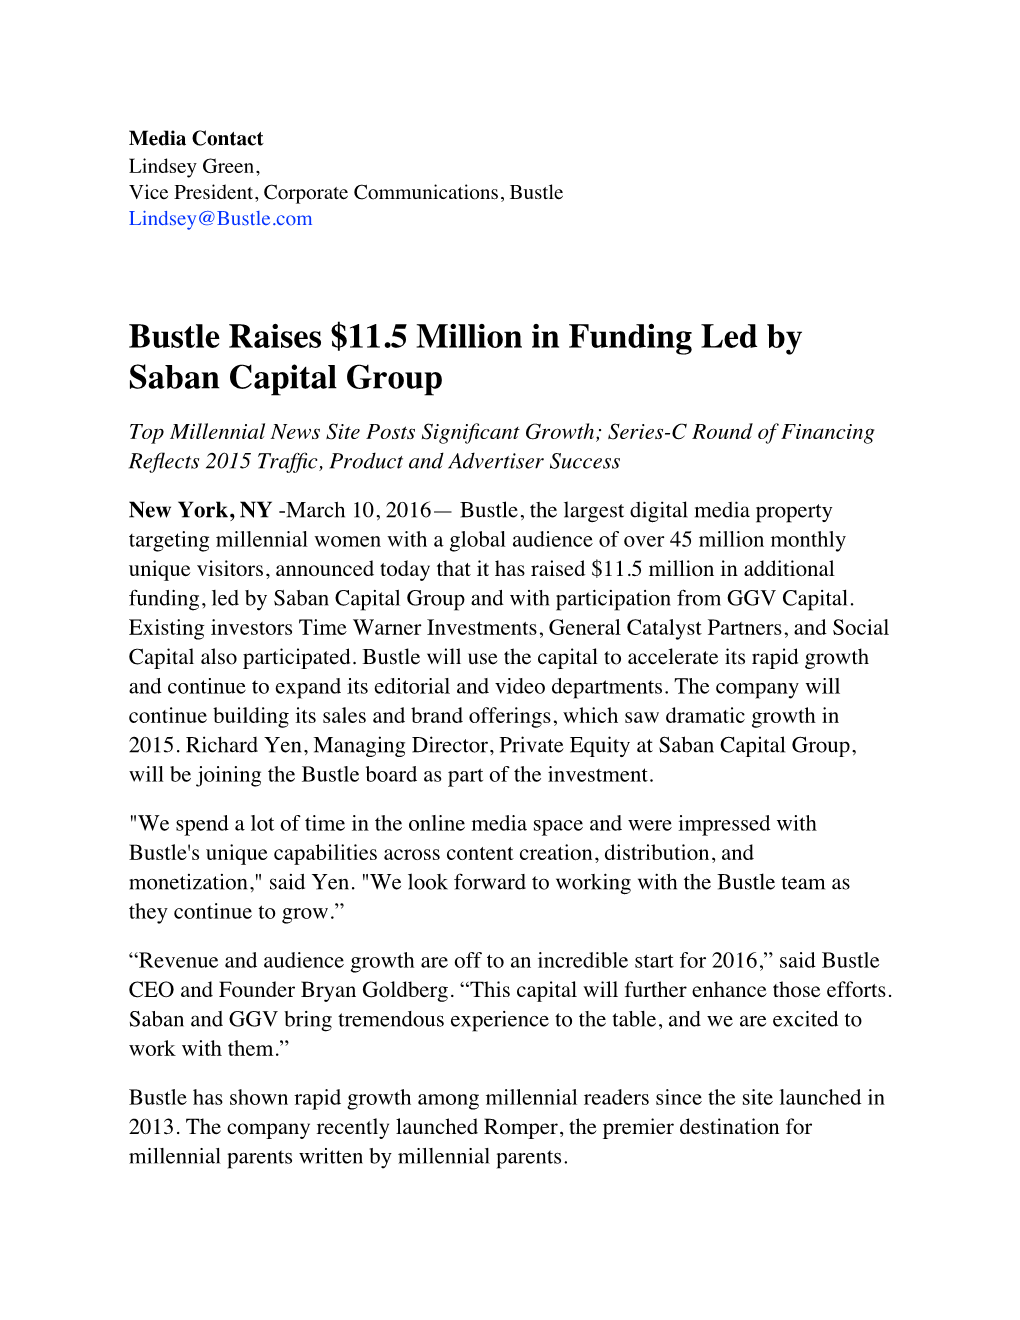 Bustle Raises $11.5 Million in Funding Led by Saban Capital Group